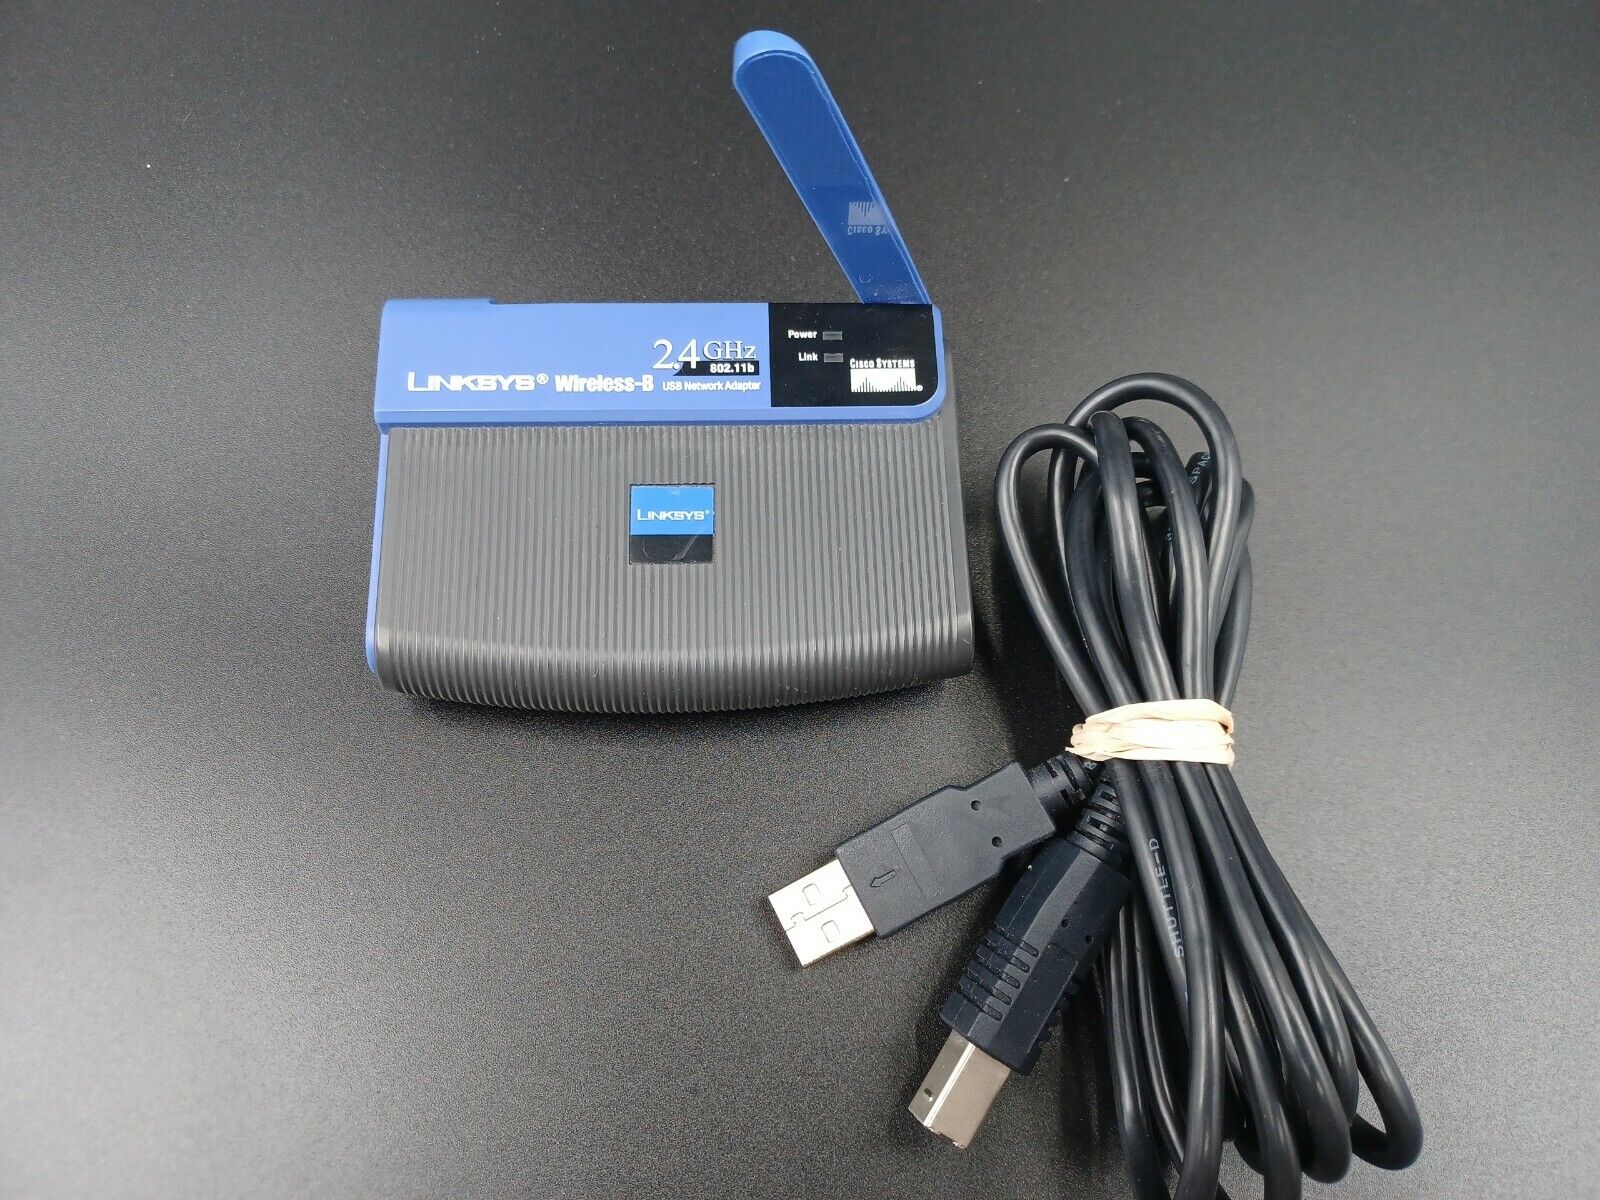 Linksys WUSB11 v4 2.4Ghz 802.11b Wireless B USB Network Adapter